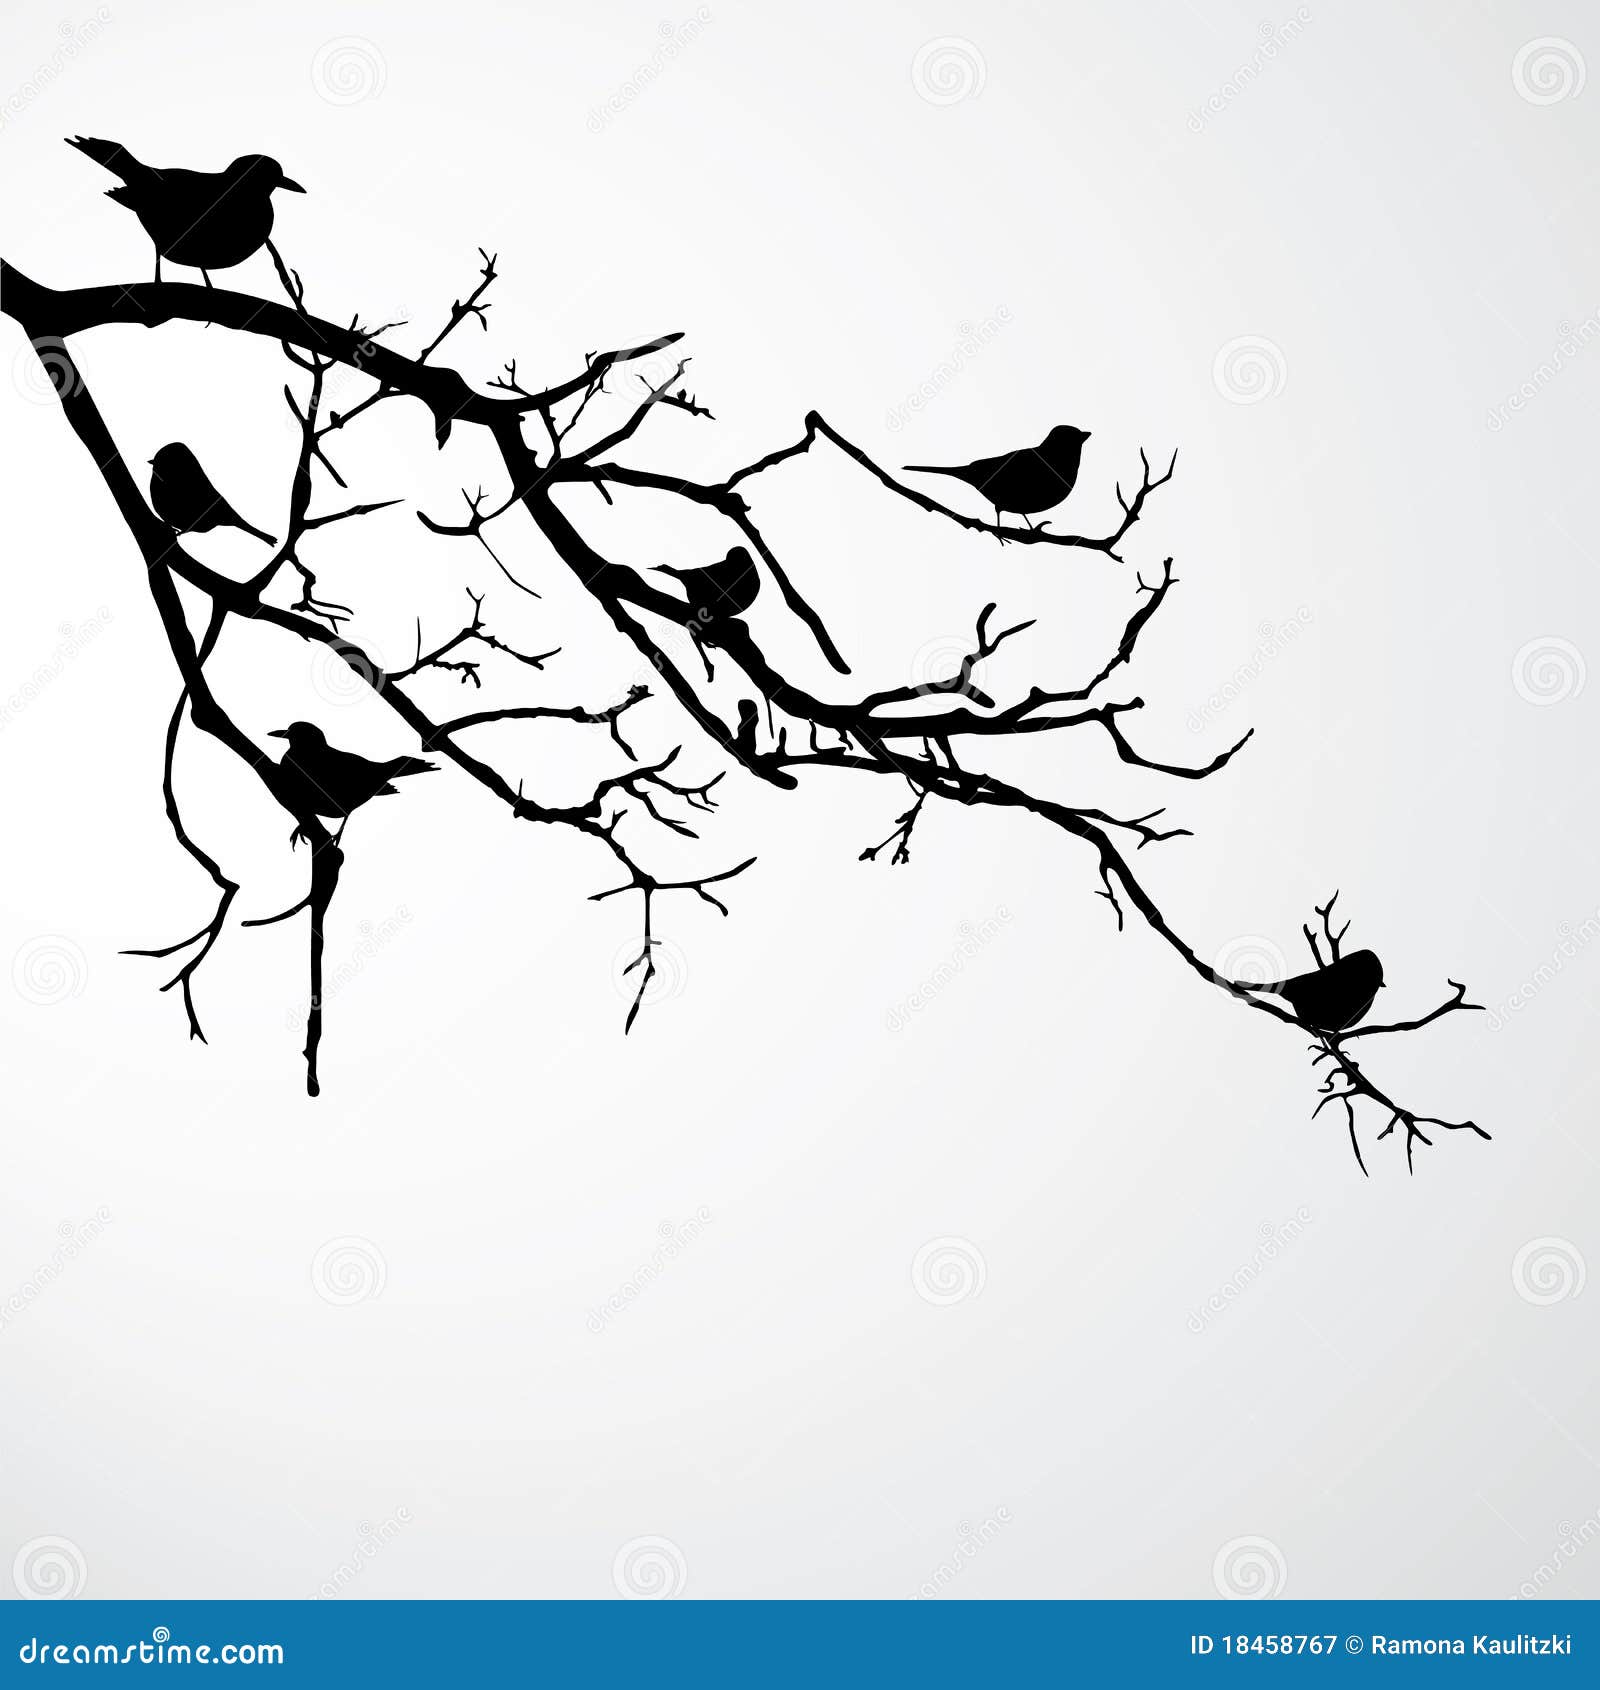 8141 Bird Branches Tattoo Images Stock Photos  Vectors  Shutterstock